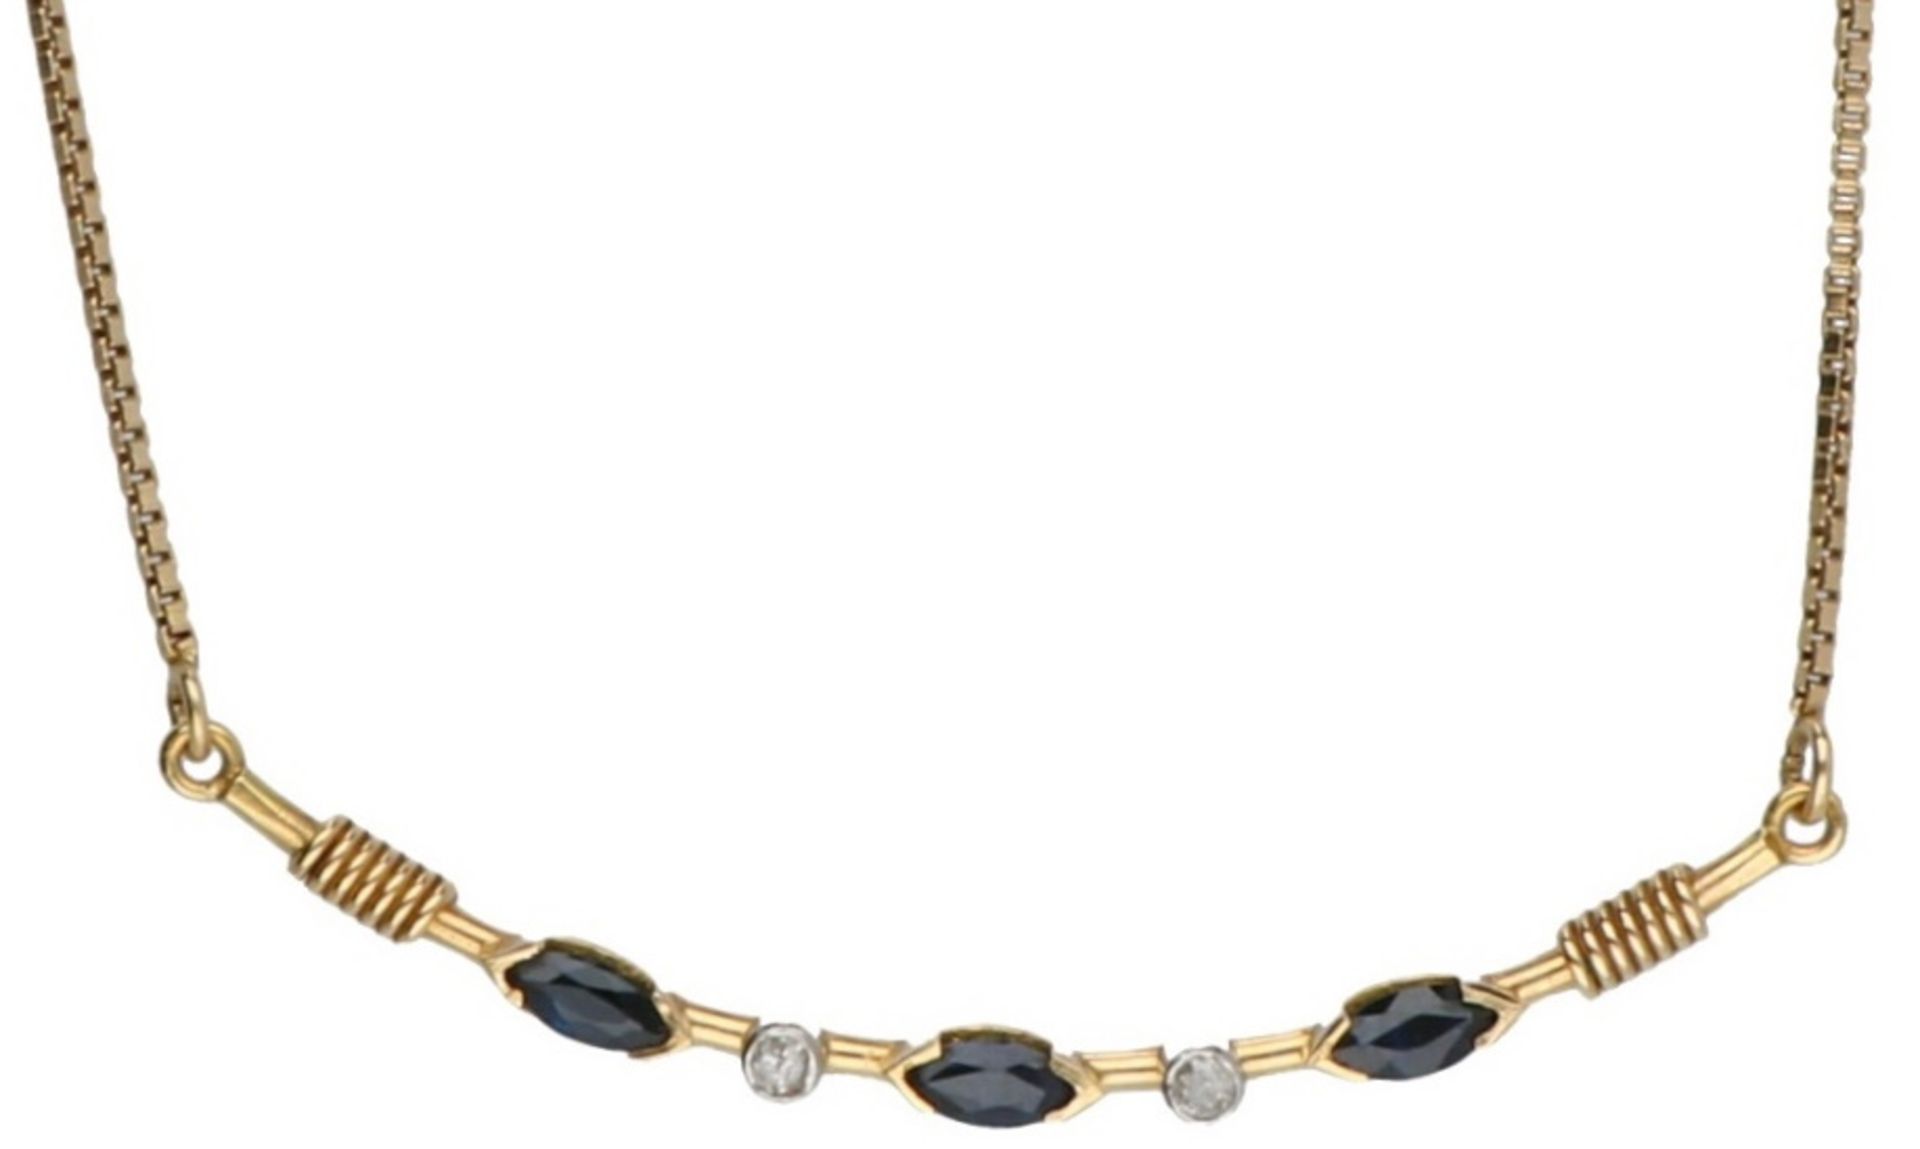 Venetian chain necklace yellow gold, ca. 0.04 carat diamond and sapphire - 14 ct.